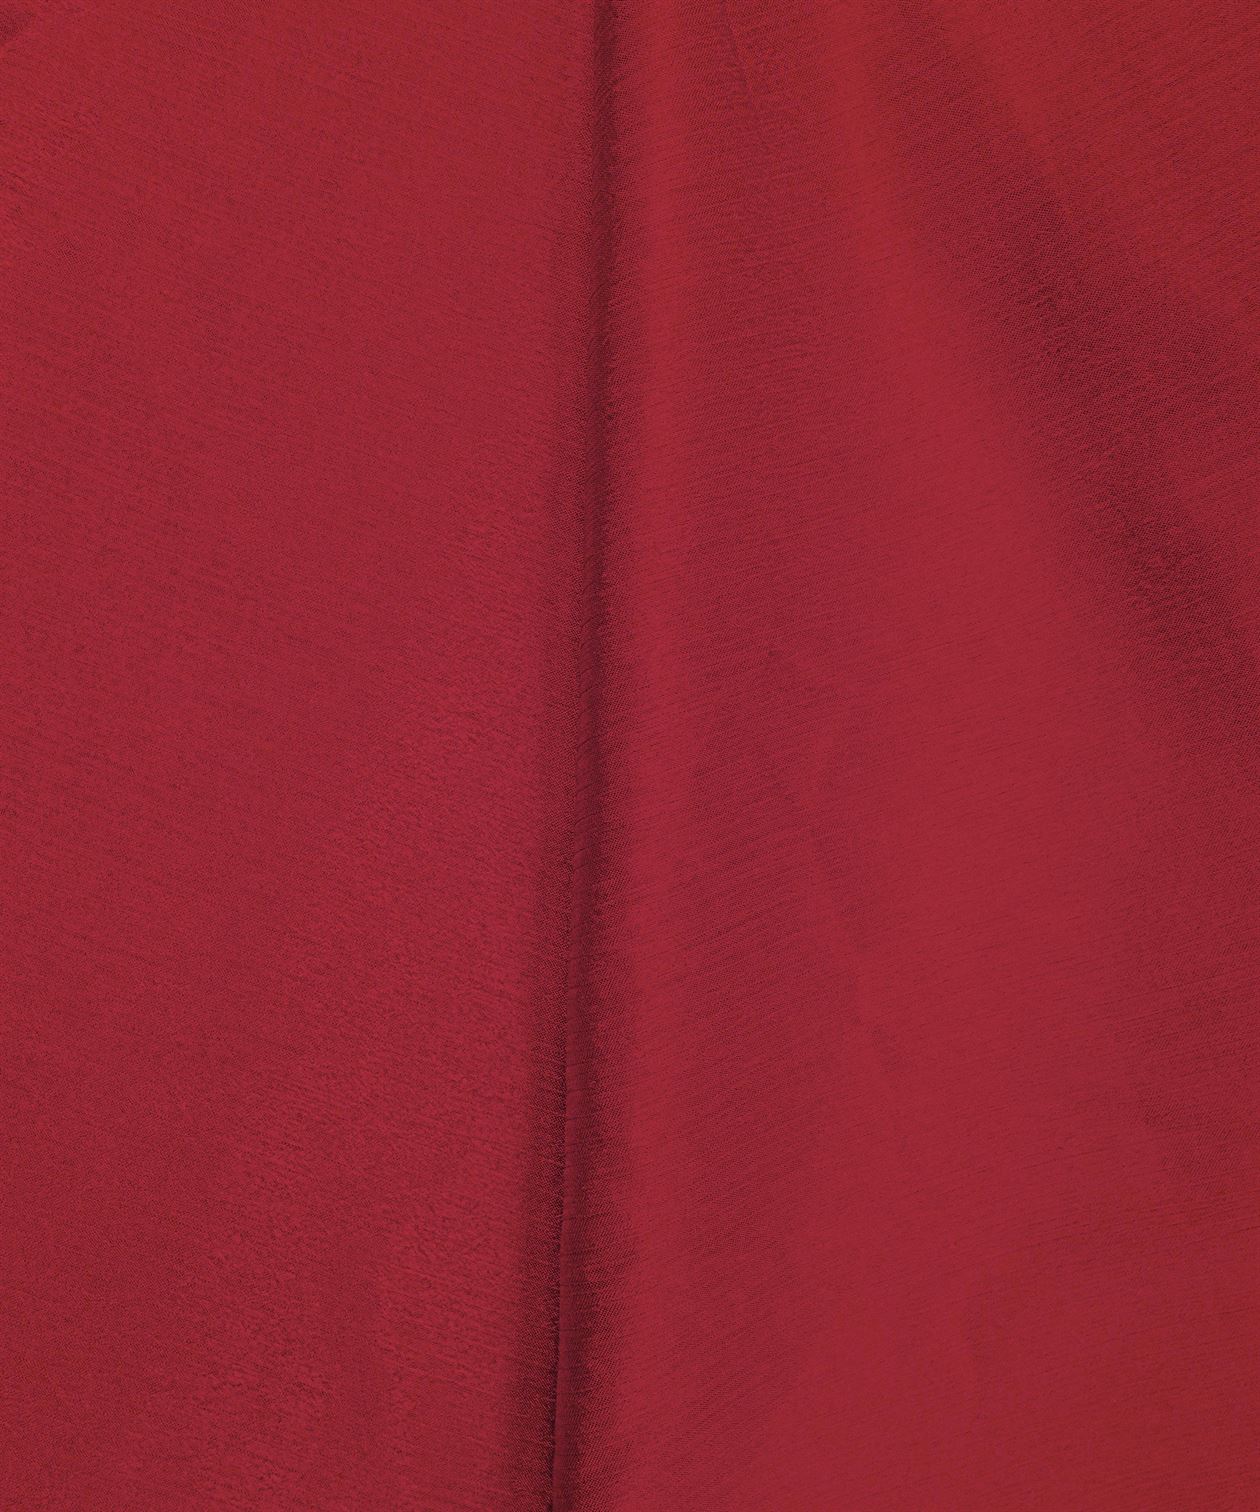 Maroon Plain Dyed Bright Chiffon Fabric